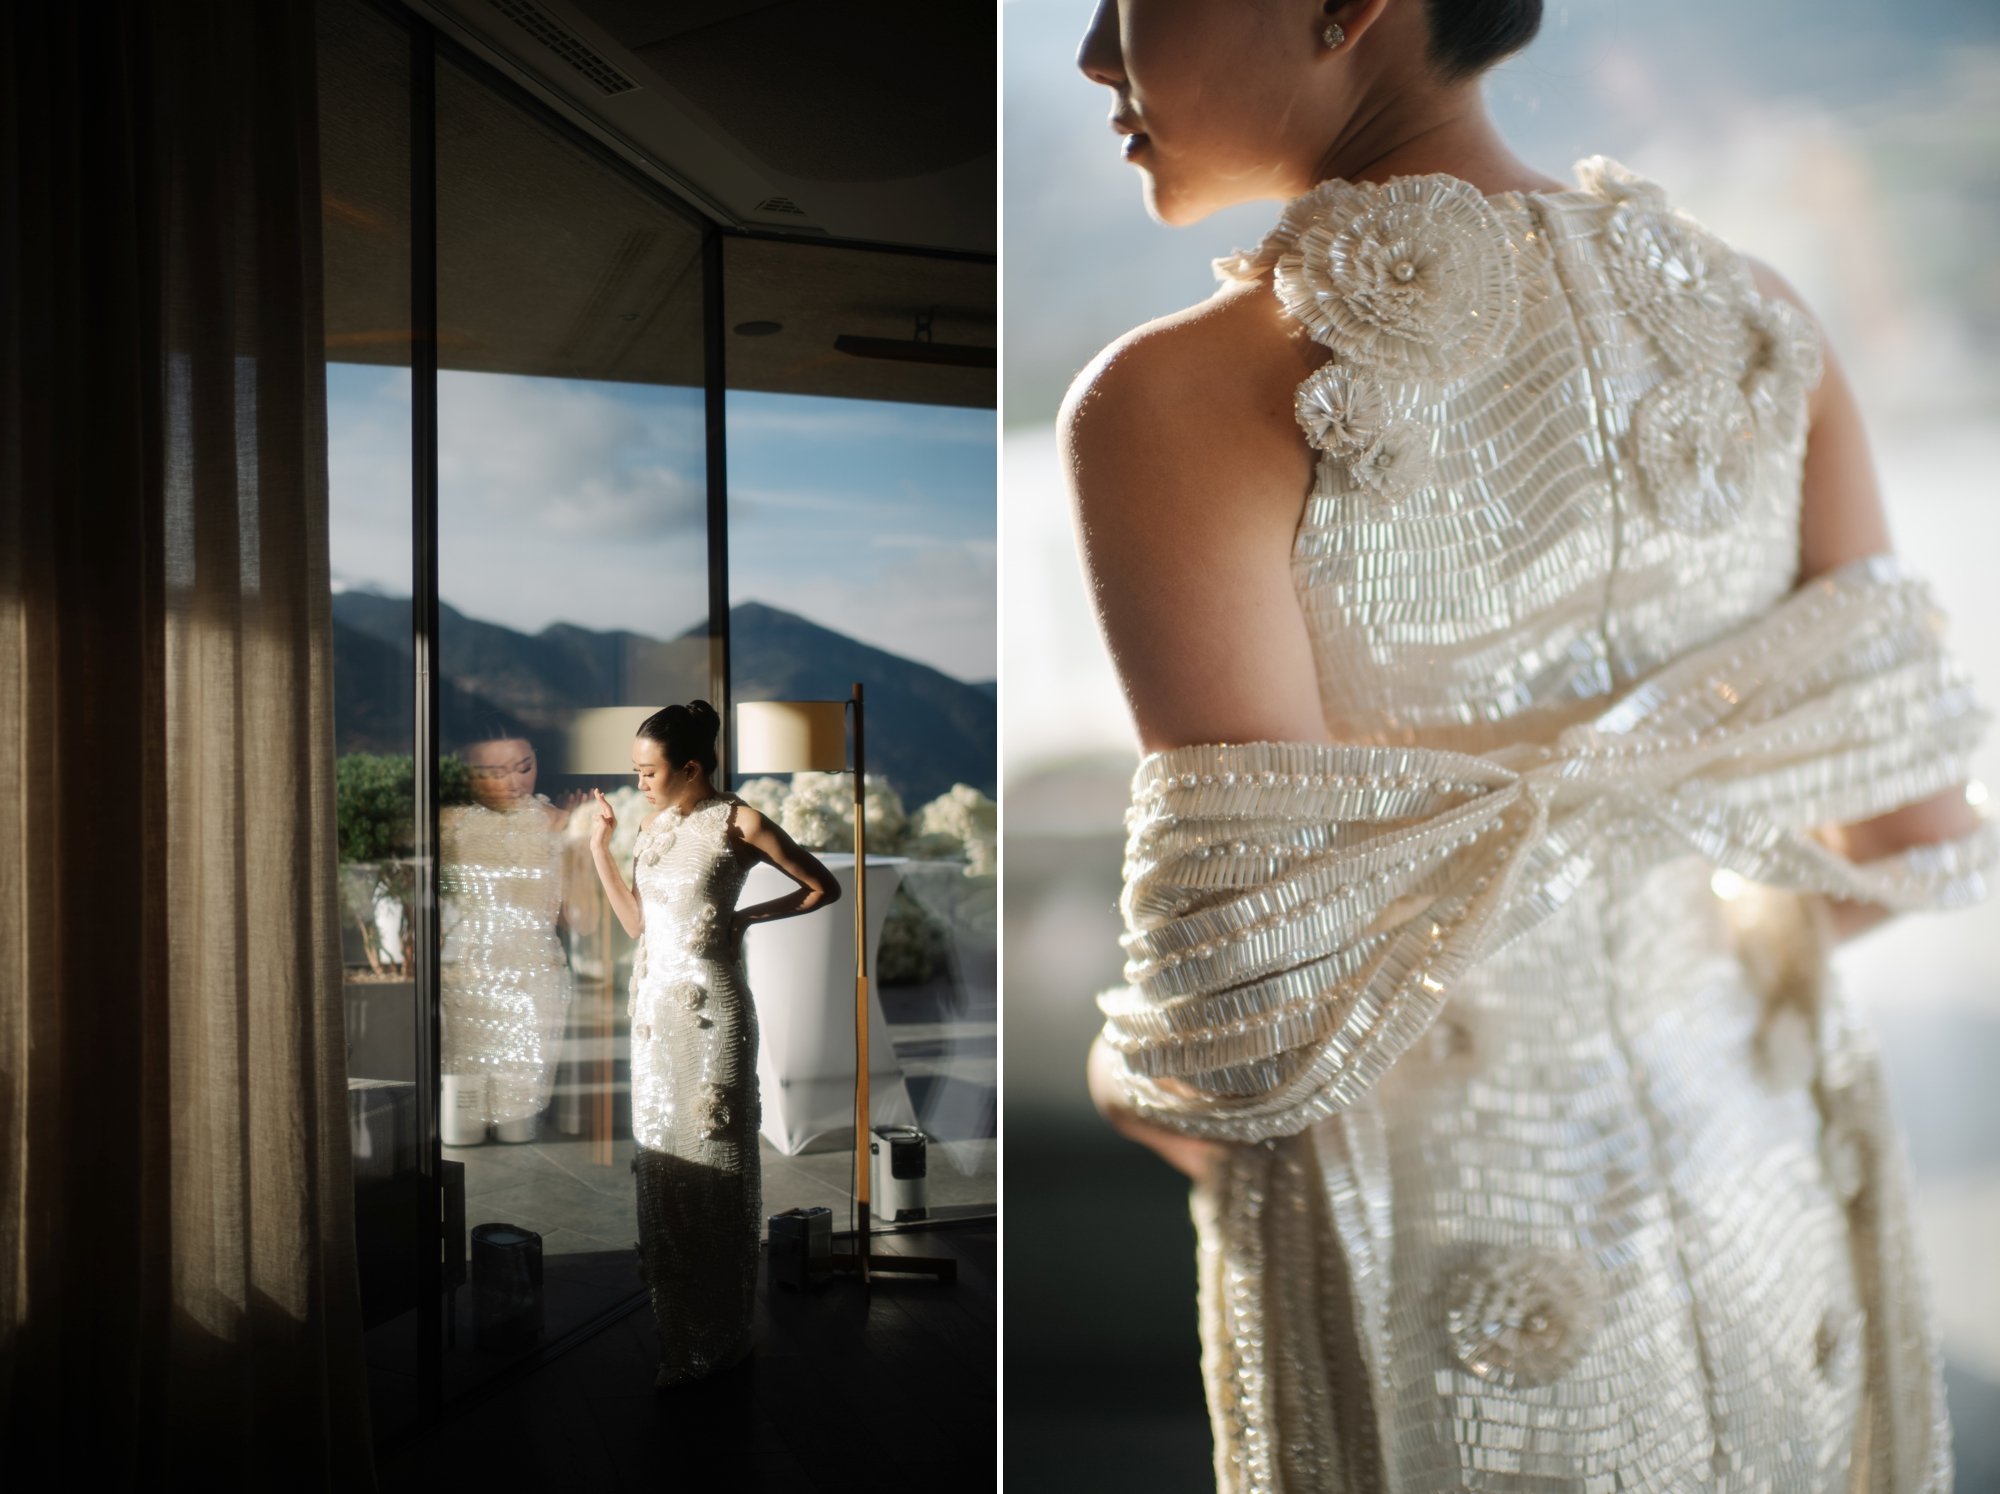 Prawira-Evelyn-Dolomites-Italy-Santre wedding-Yefta Gunawan-Jeriko MUA-Carol Kuntjoro Photography-102.jpg